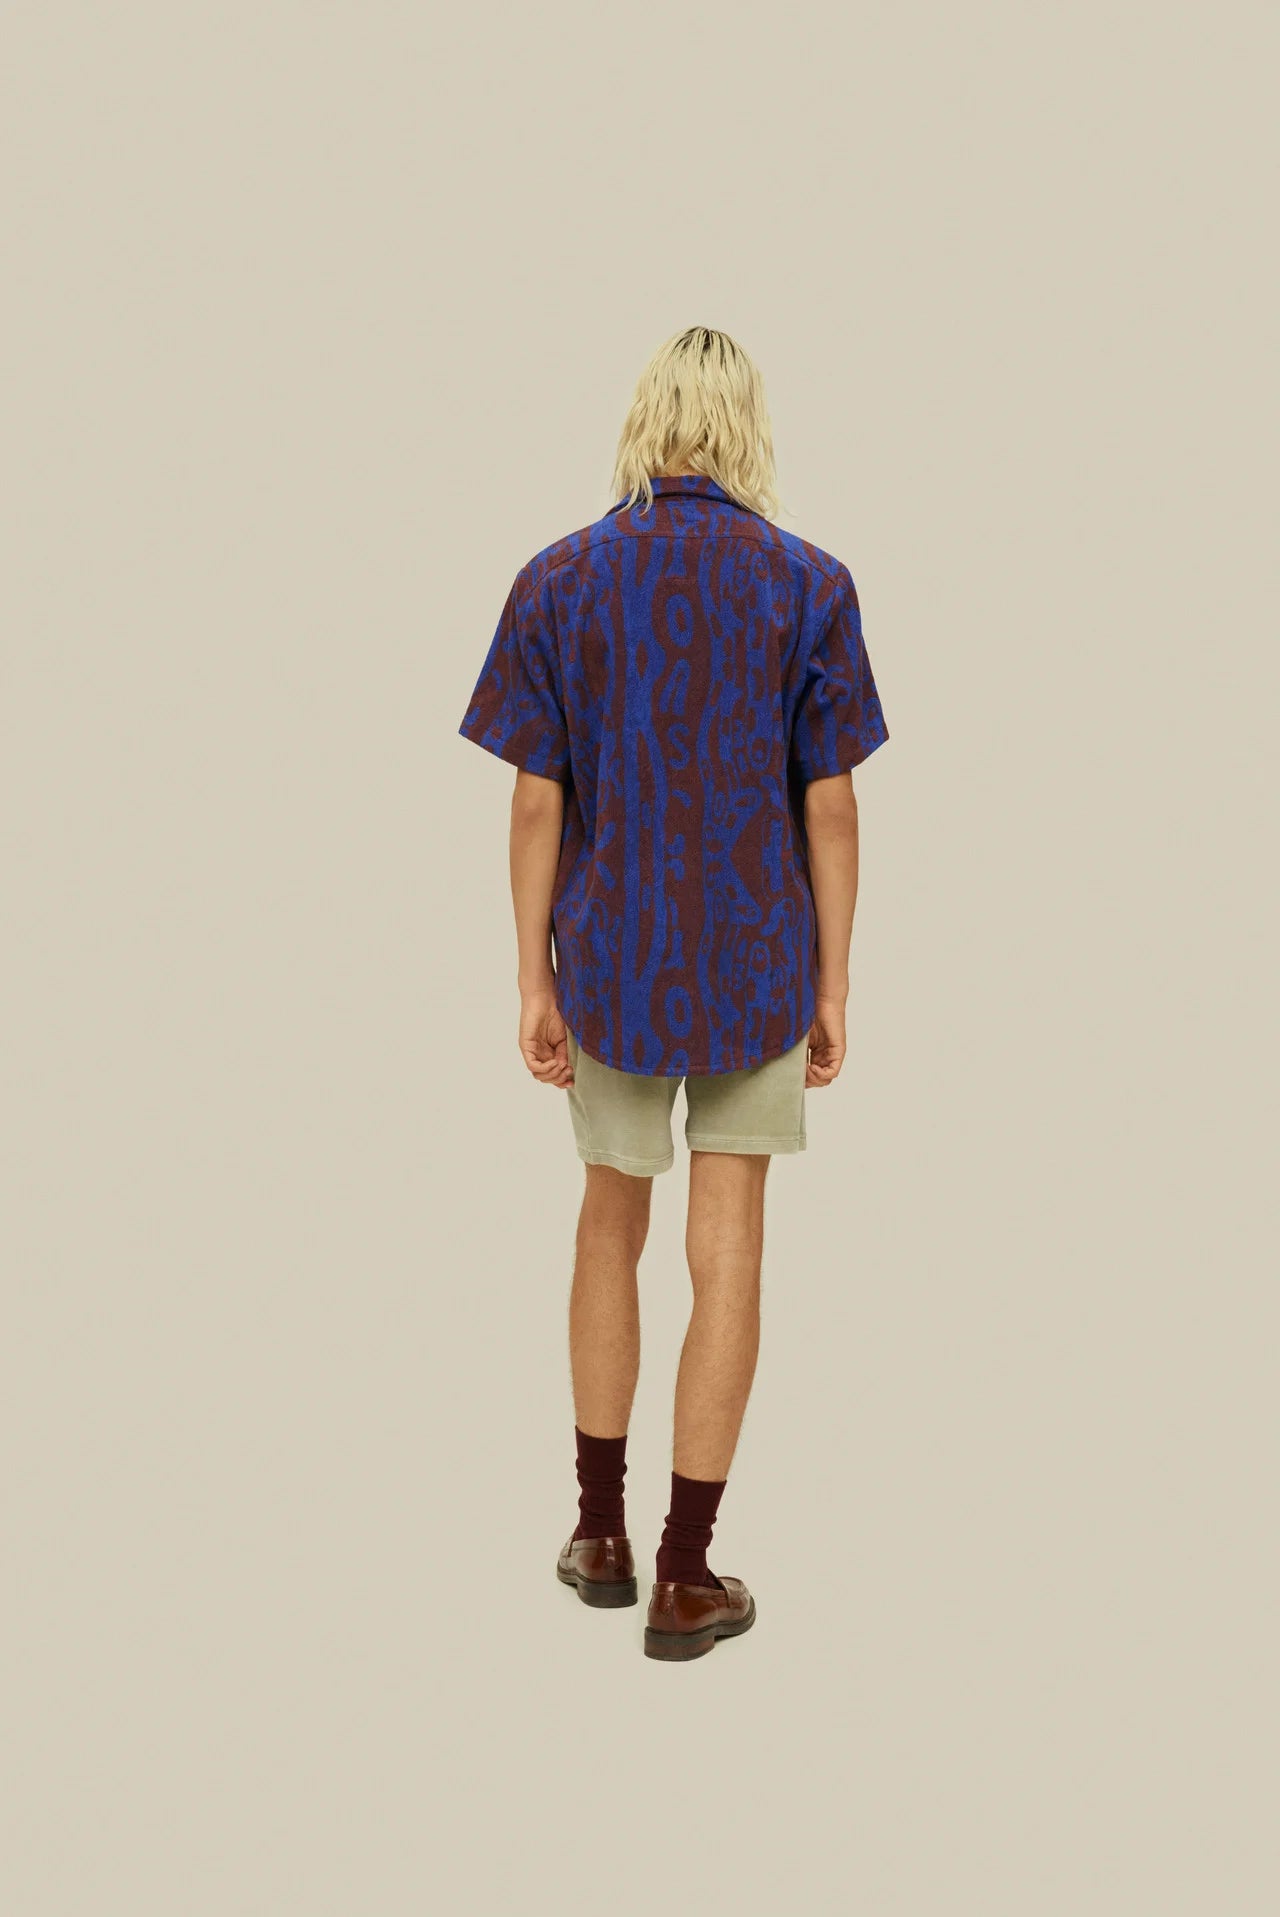 OAS Thenards Jiggle Cuba Terry Shirt on model. Model wears shirt with khaki shorts. Photo taken of back